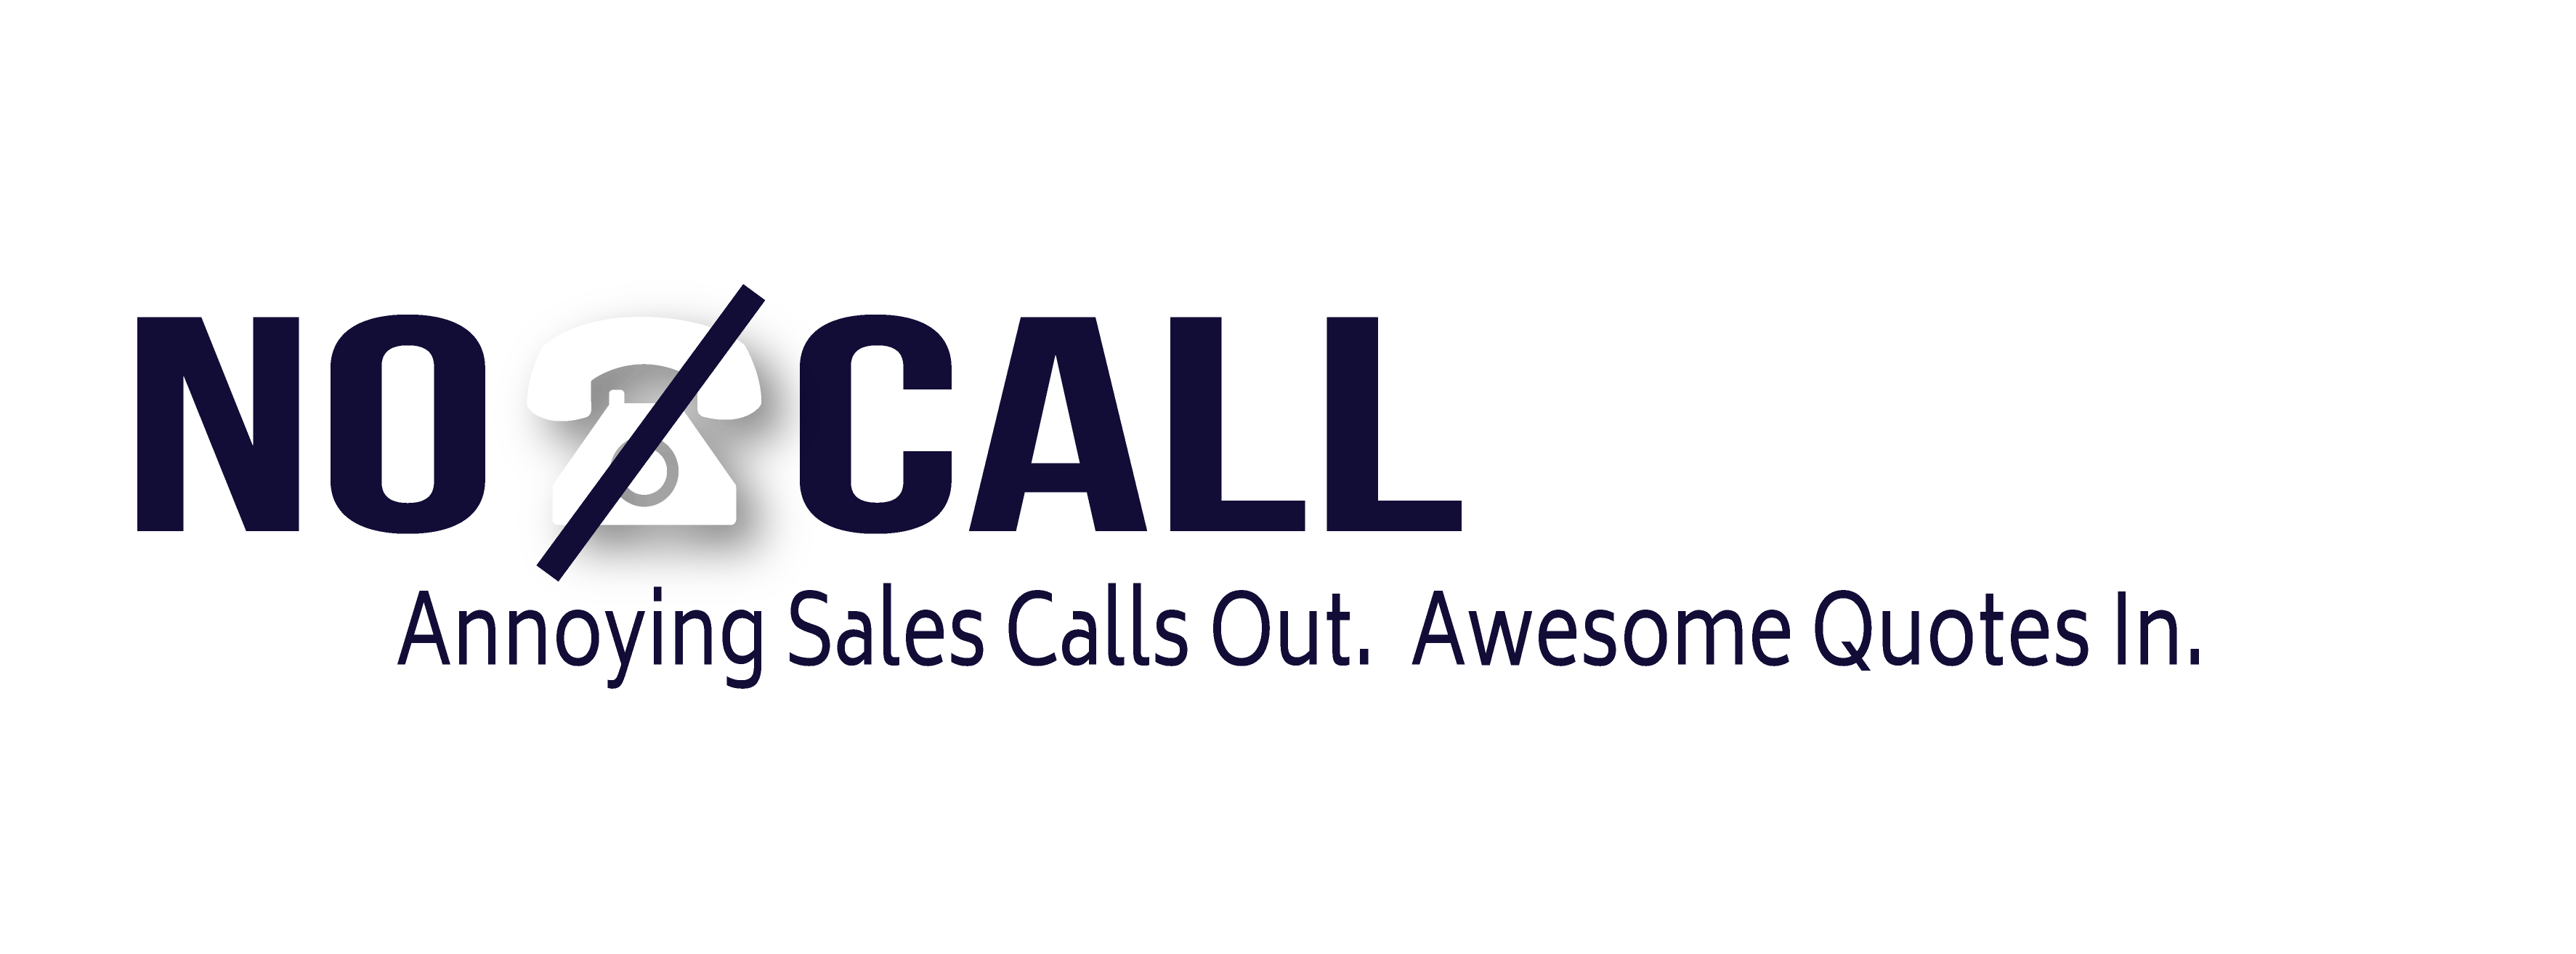 No Calls Logo - no call insurance quote |